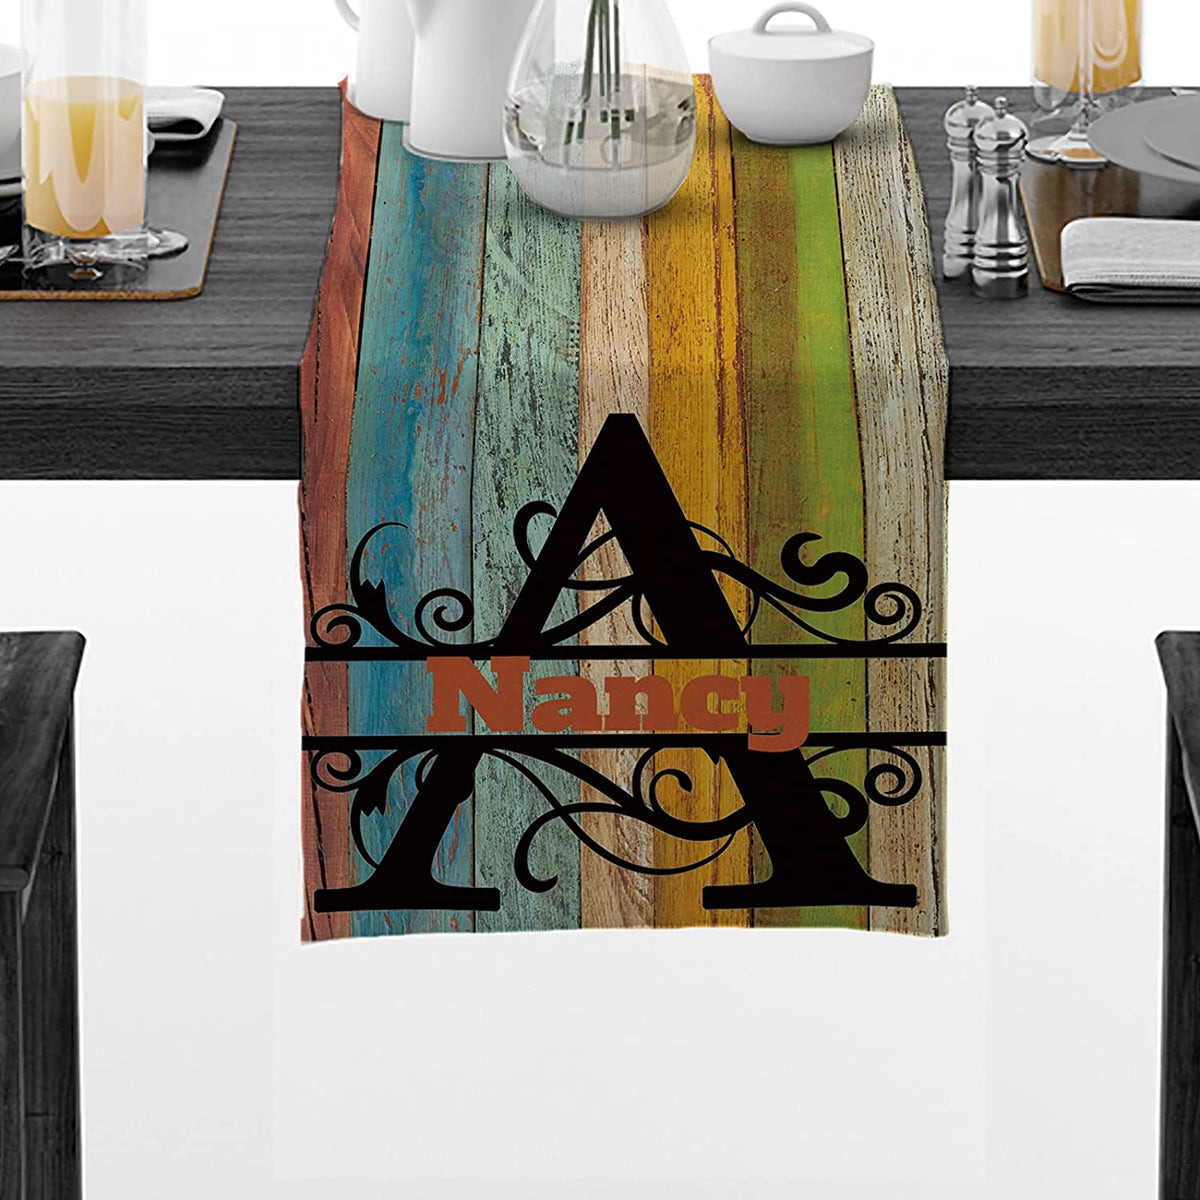 Sinpooo customizable tablecloth (wood grain-2)